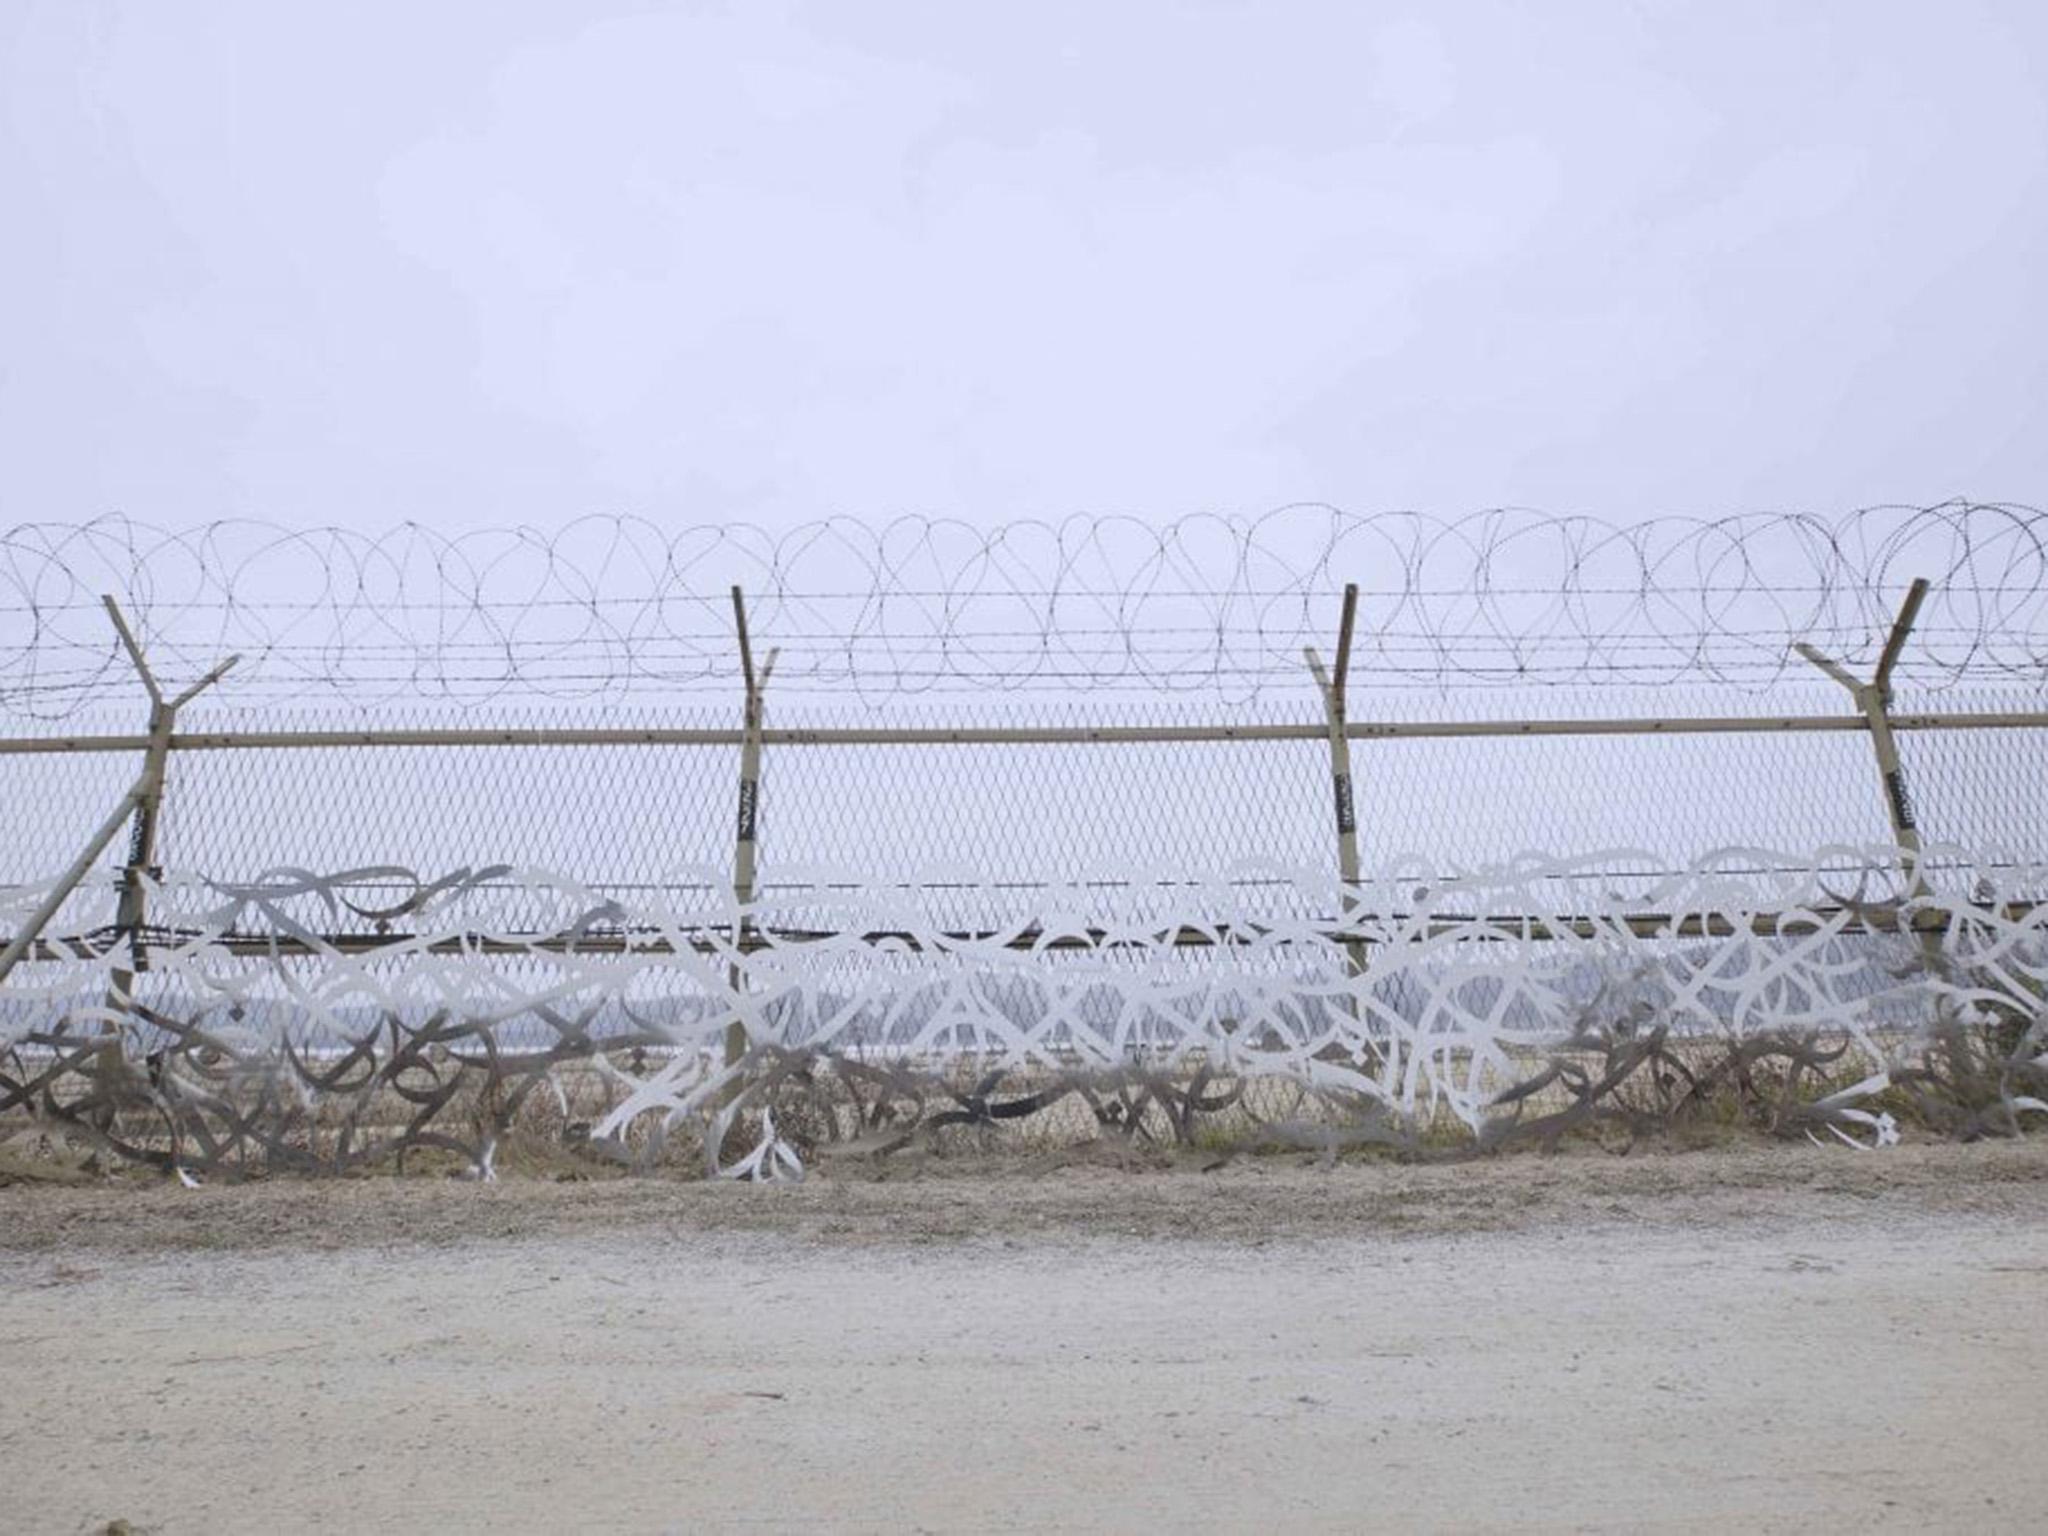 The artwork installed along a DMZ fence in Gyeonggi Province, South Korea.